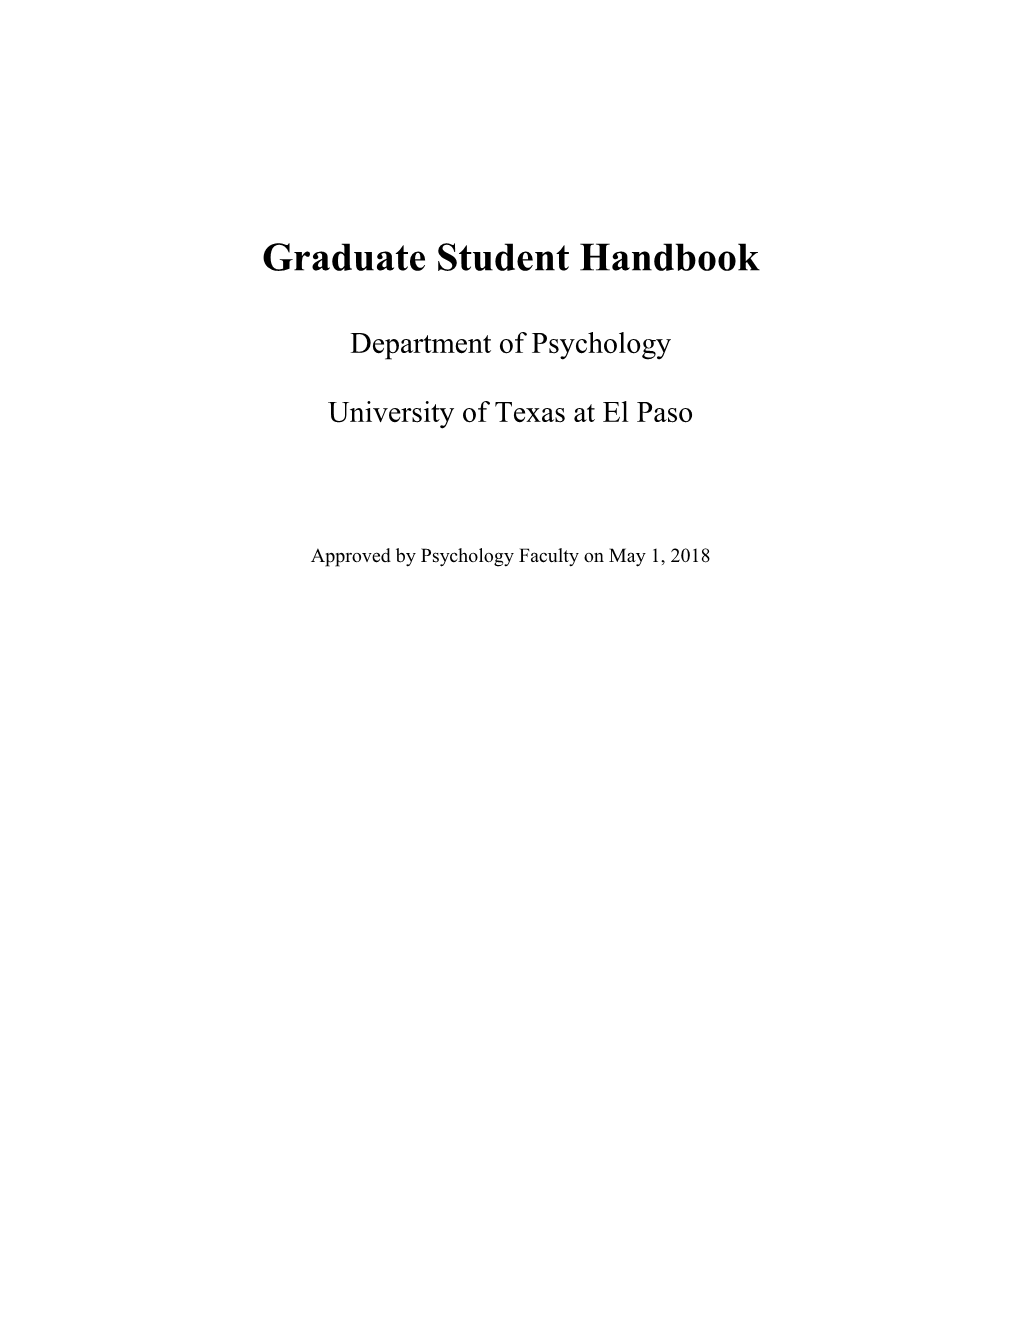 The Graduate Student Handbook